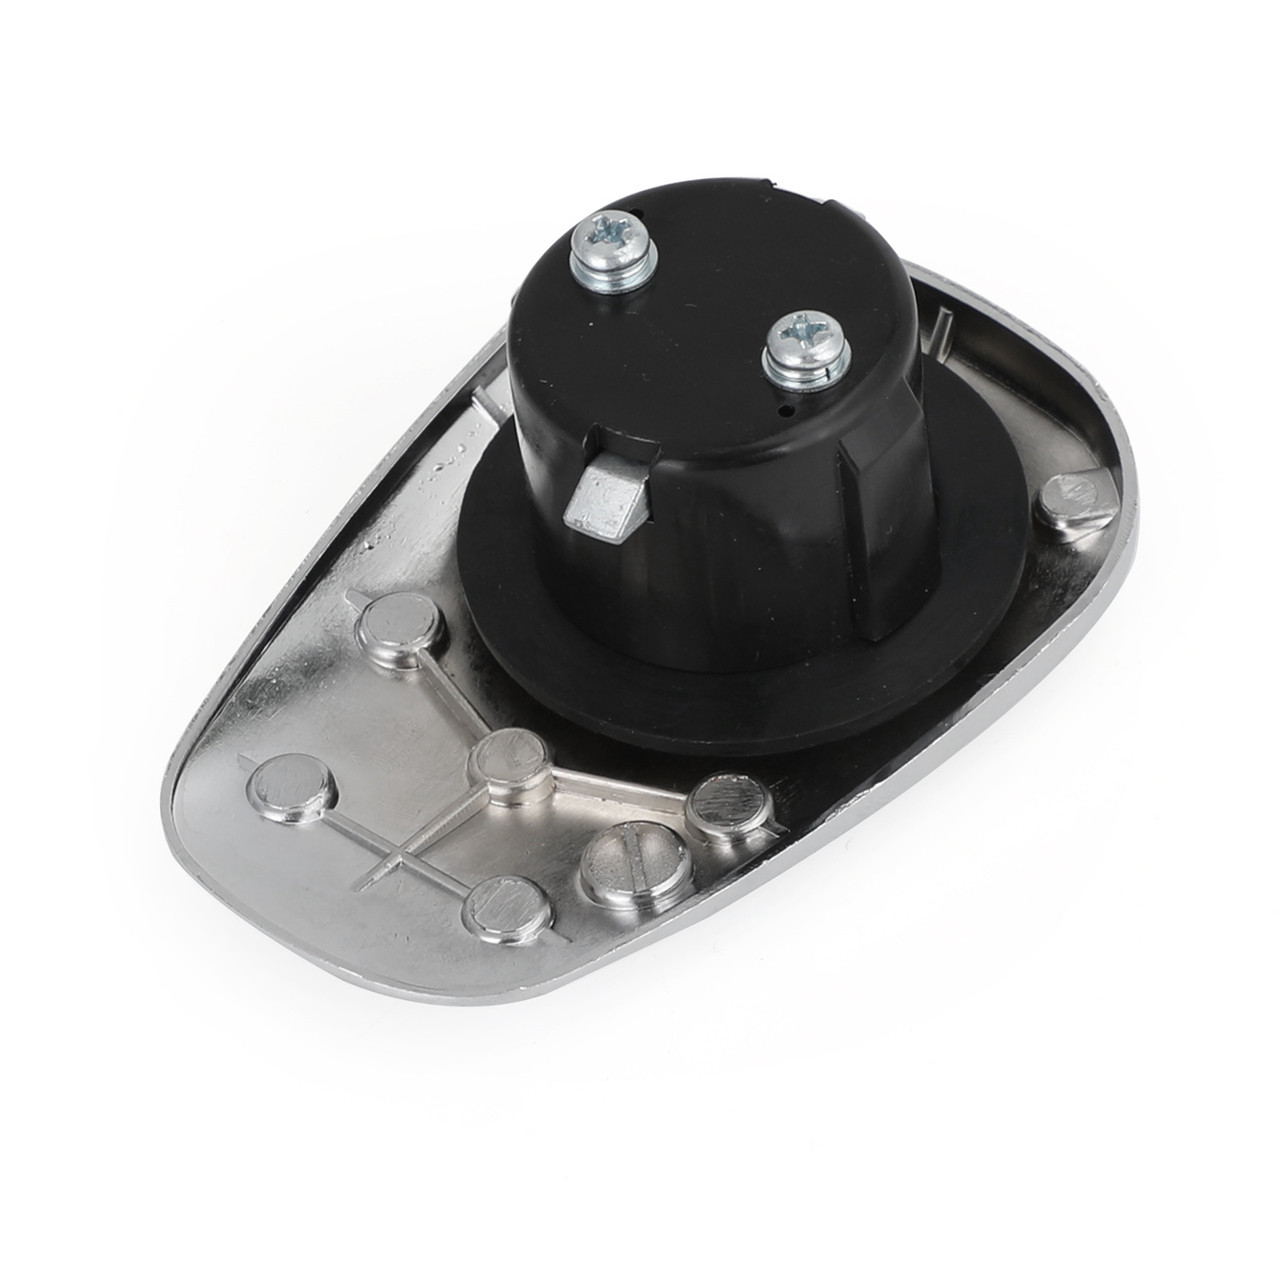 Ignition Switch Fuel Gas Cap Lock Keys Set Fit for Suzuki VS600 Intruder 600 95-97 VS700 86-87 VS750 85-91 VS1400 87-04 Silver